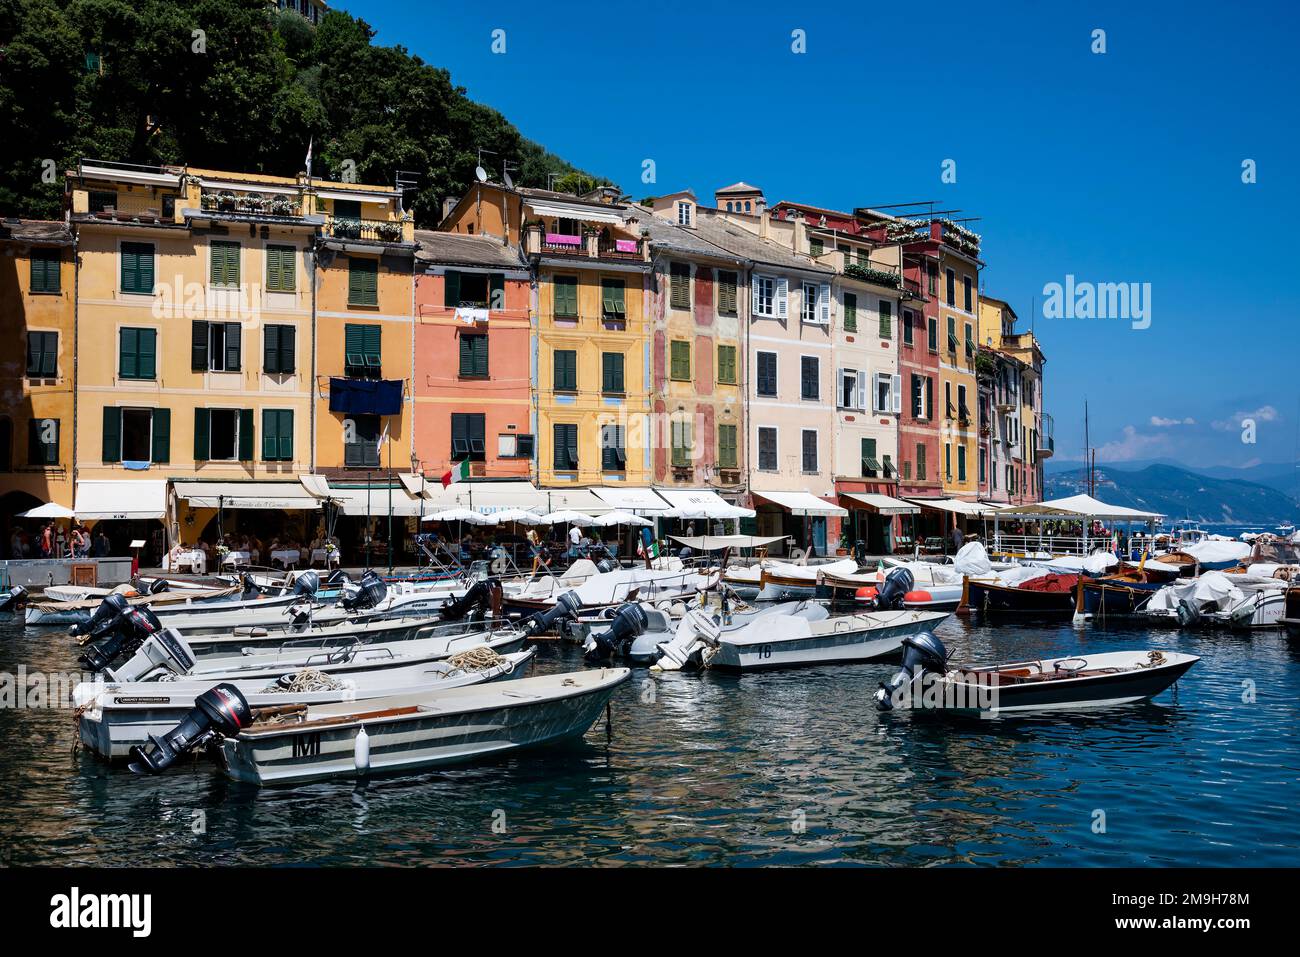 Recreational boats by waterfront buildings, Portofino, Italy Stock Photo